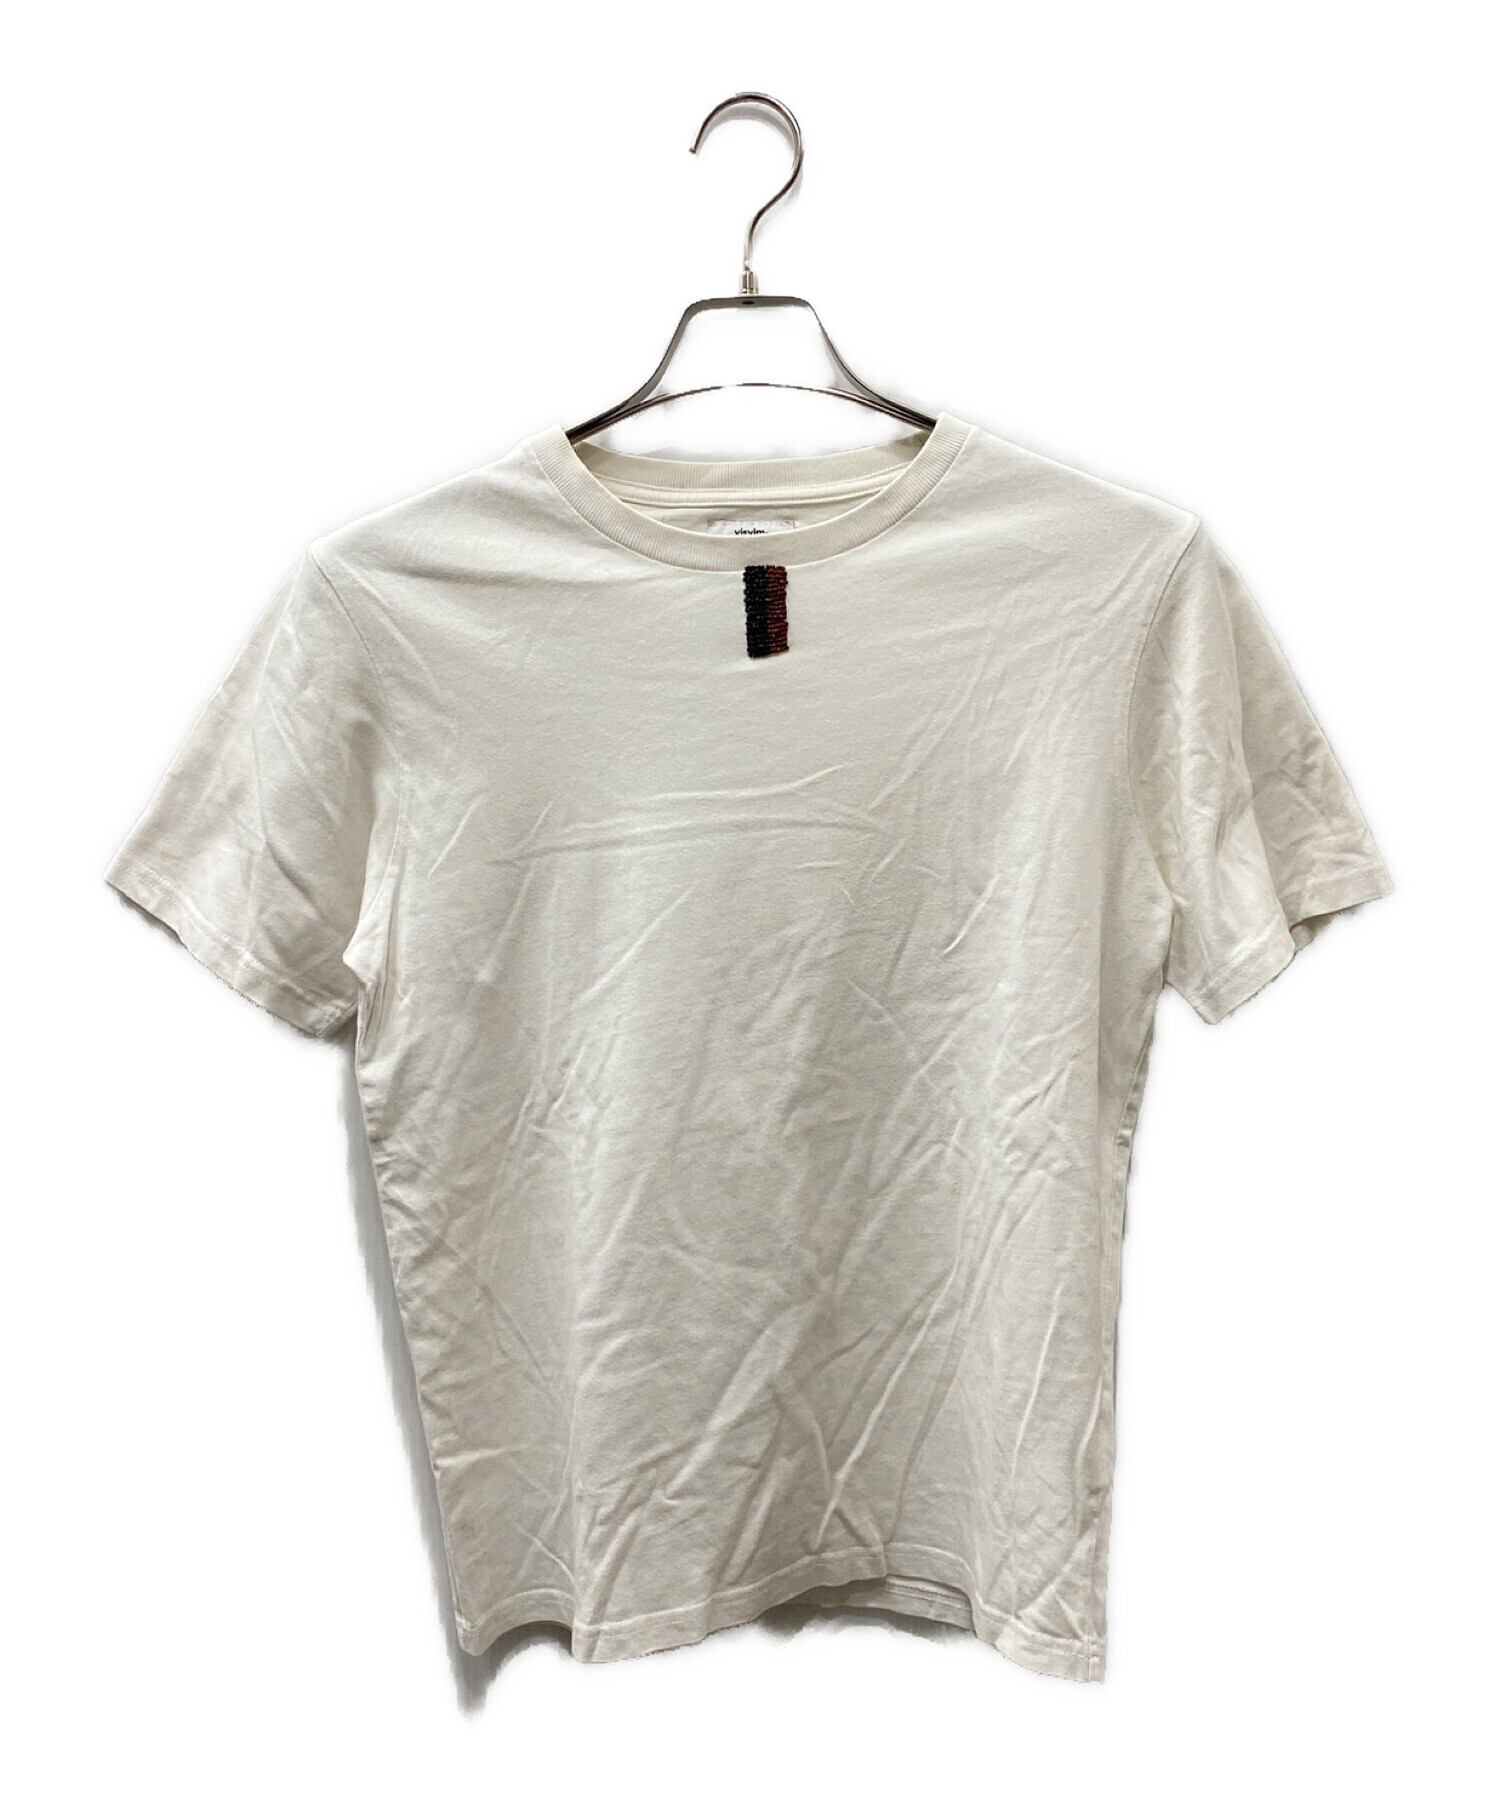 VISVIM (ビズビム) ビーズ装飾Tシャツ ホワイト サイズ:S